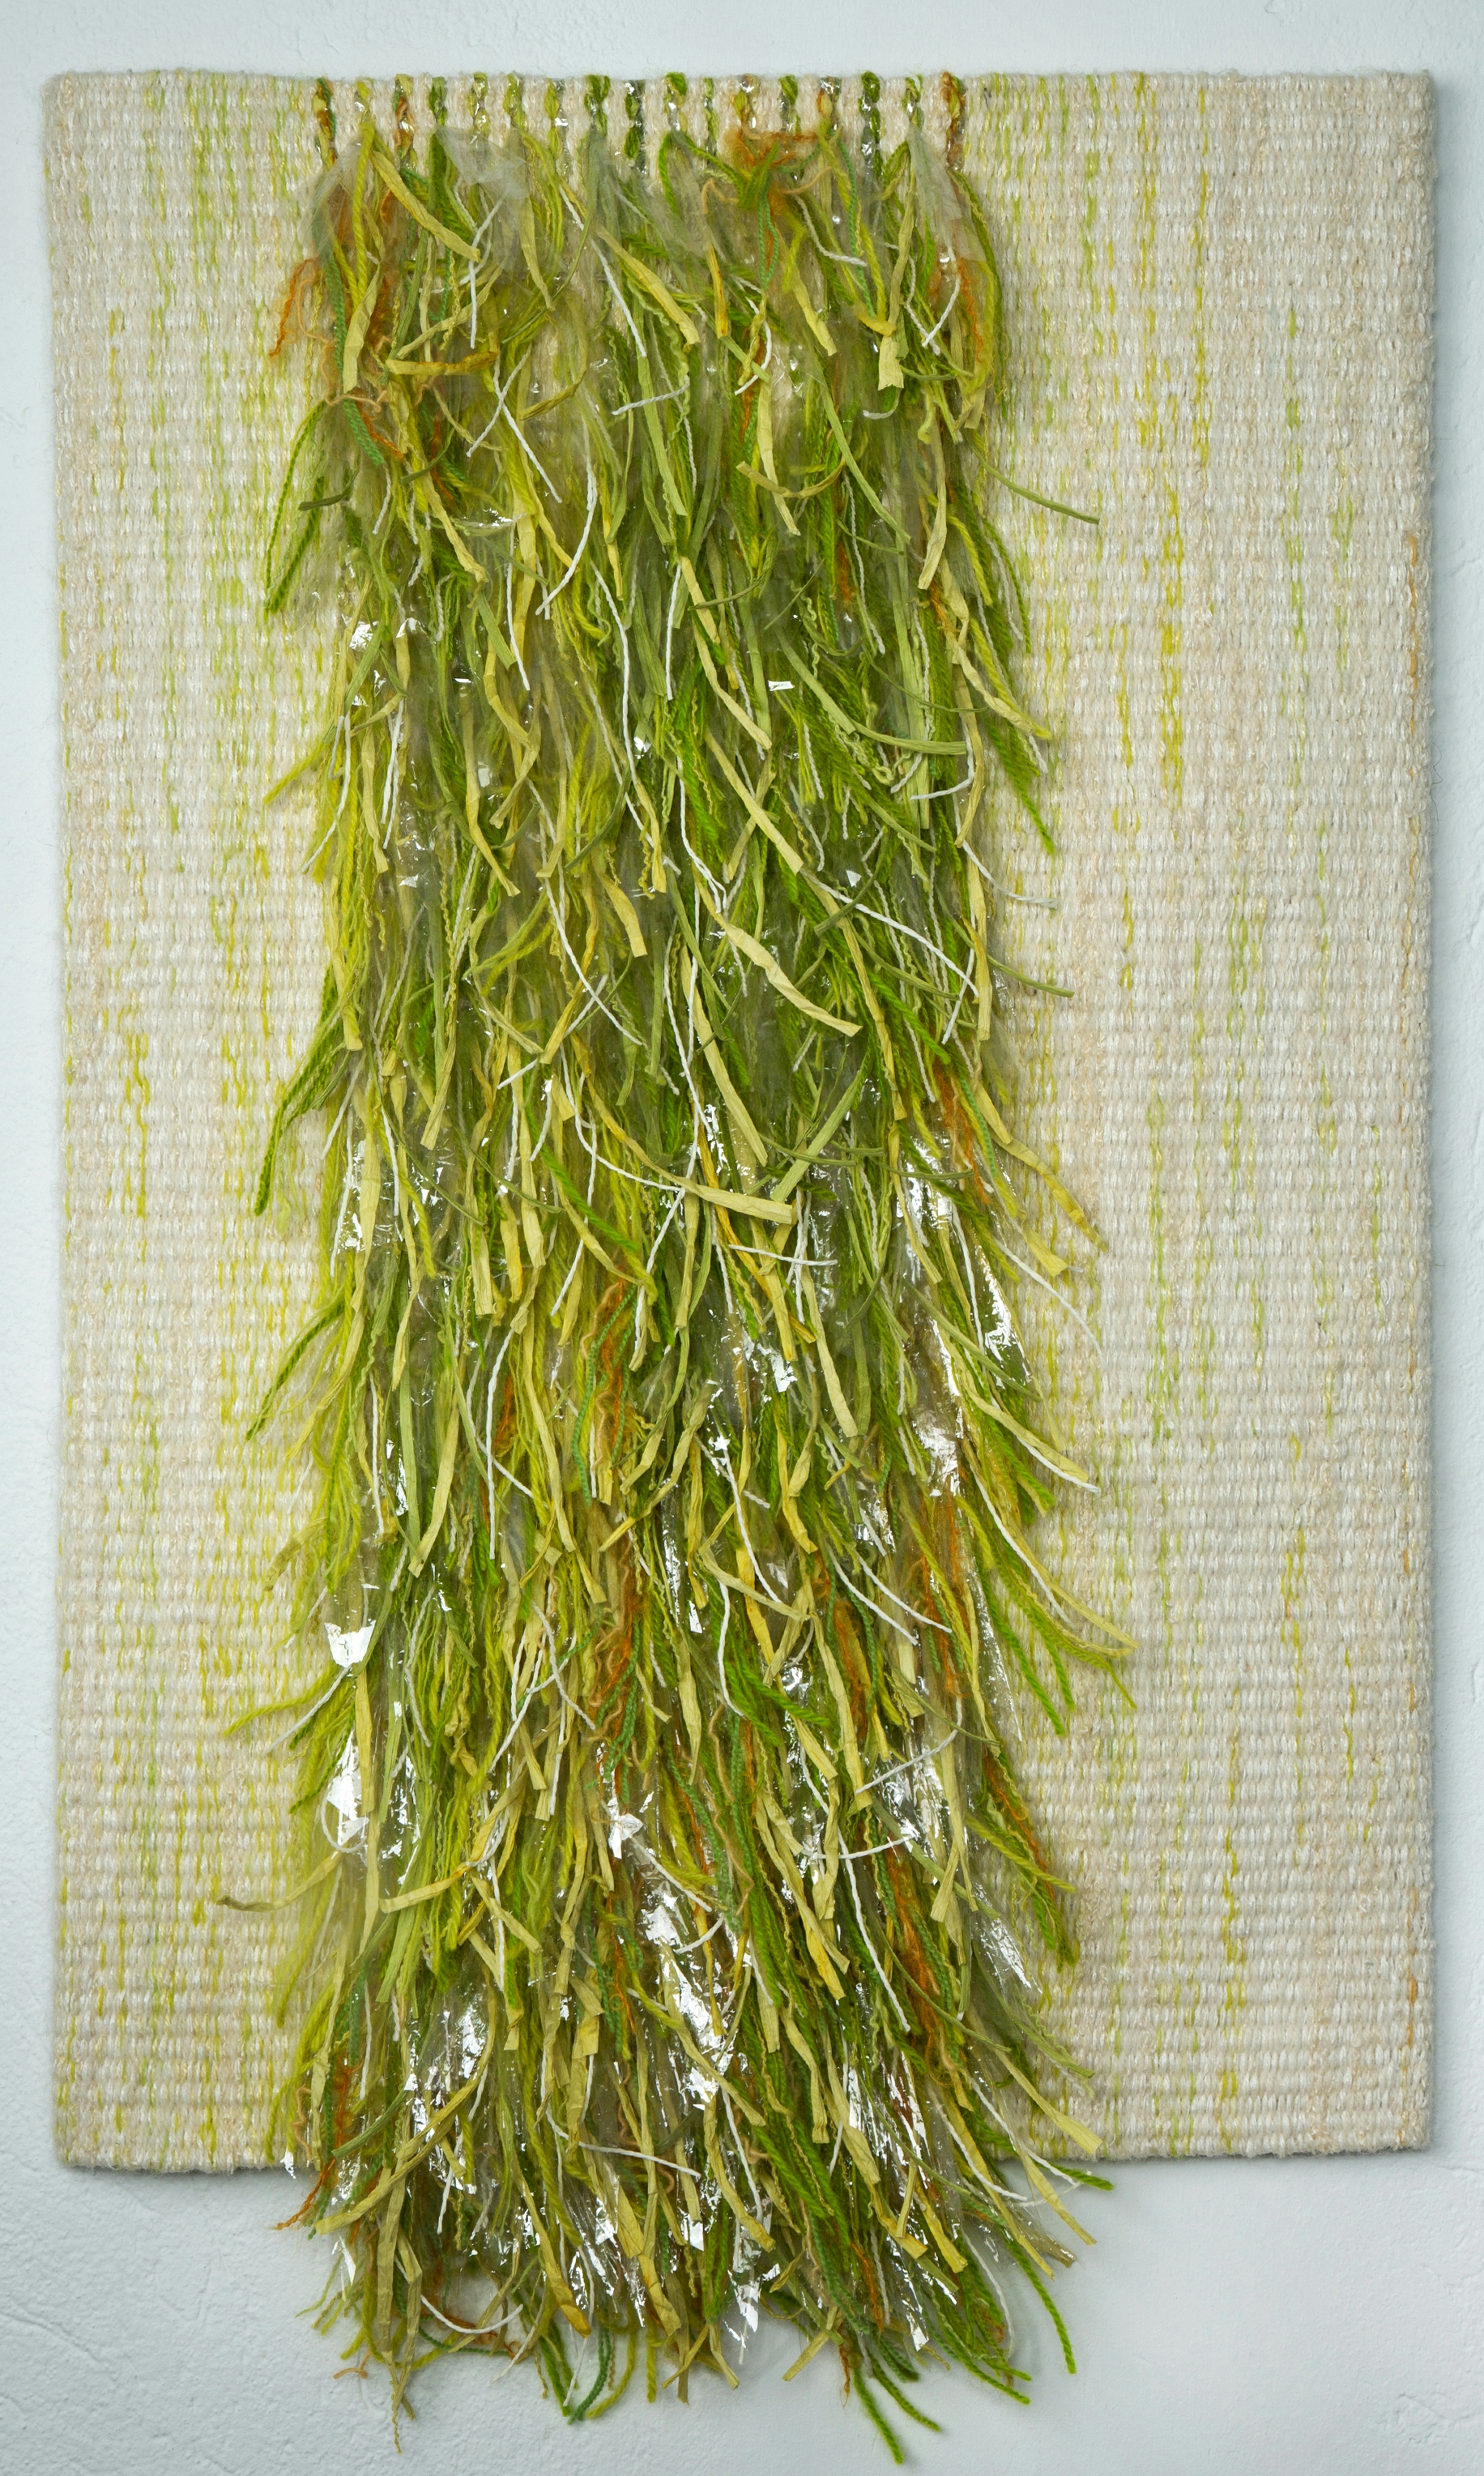 Dew 2020.
78 x 48 cm.
Wool, linen, paper, cellophane